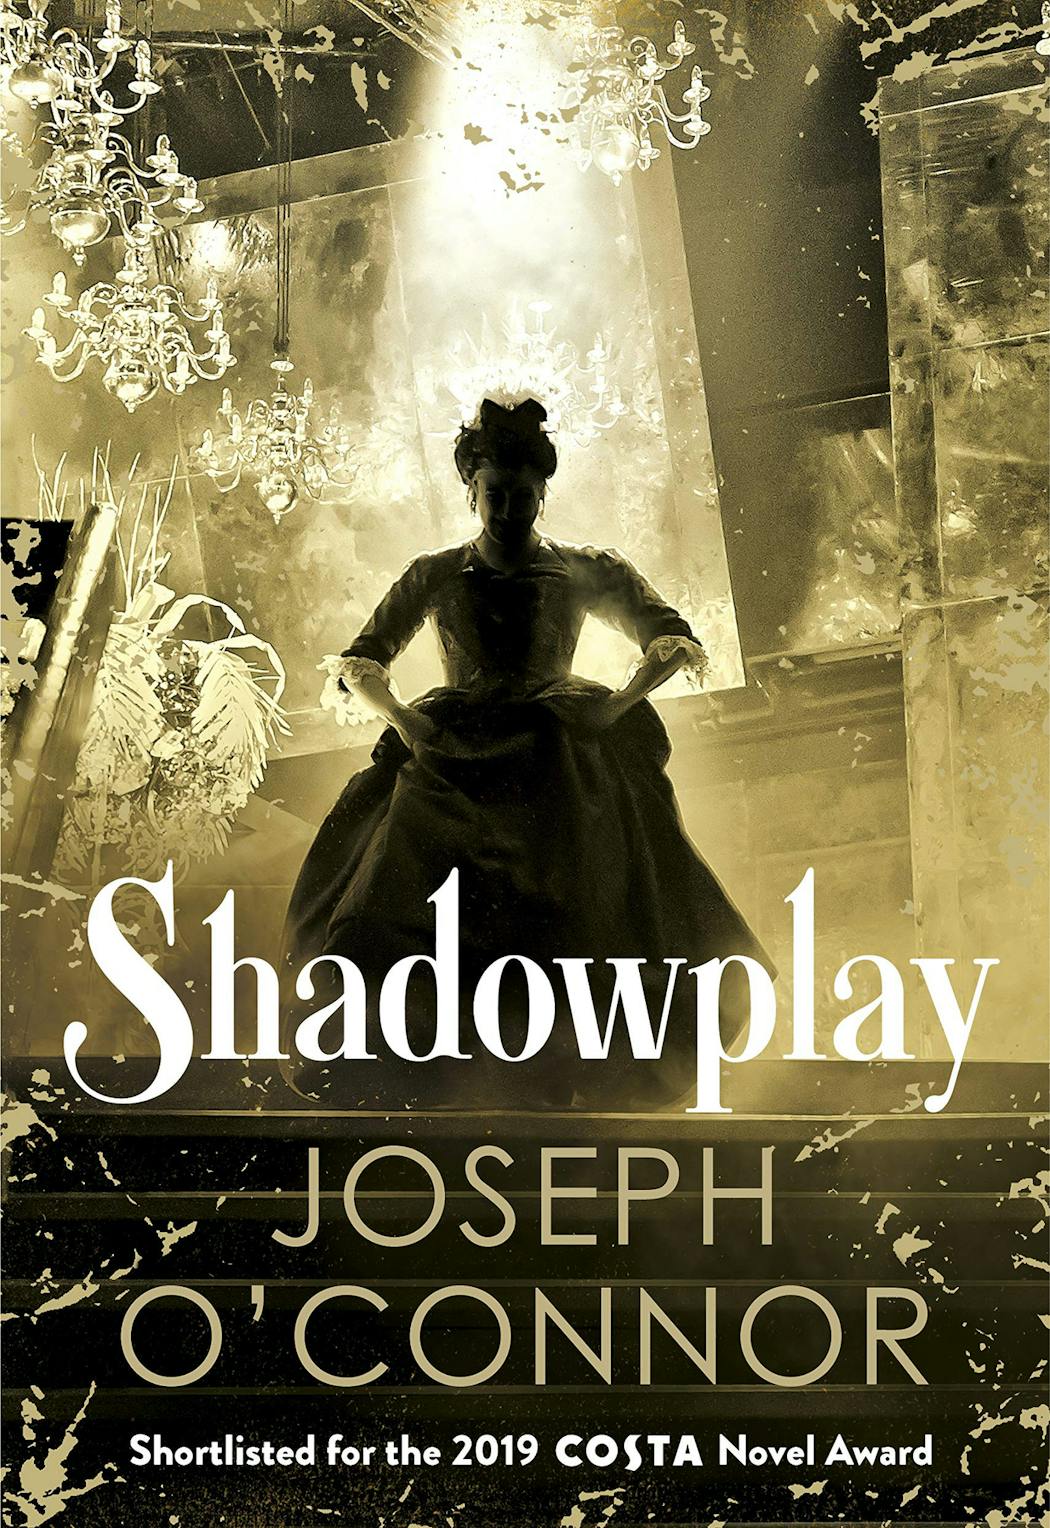 “Shadowplay,” by Joseph O’Connor